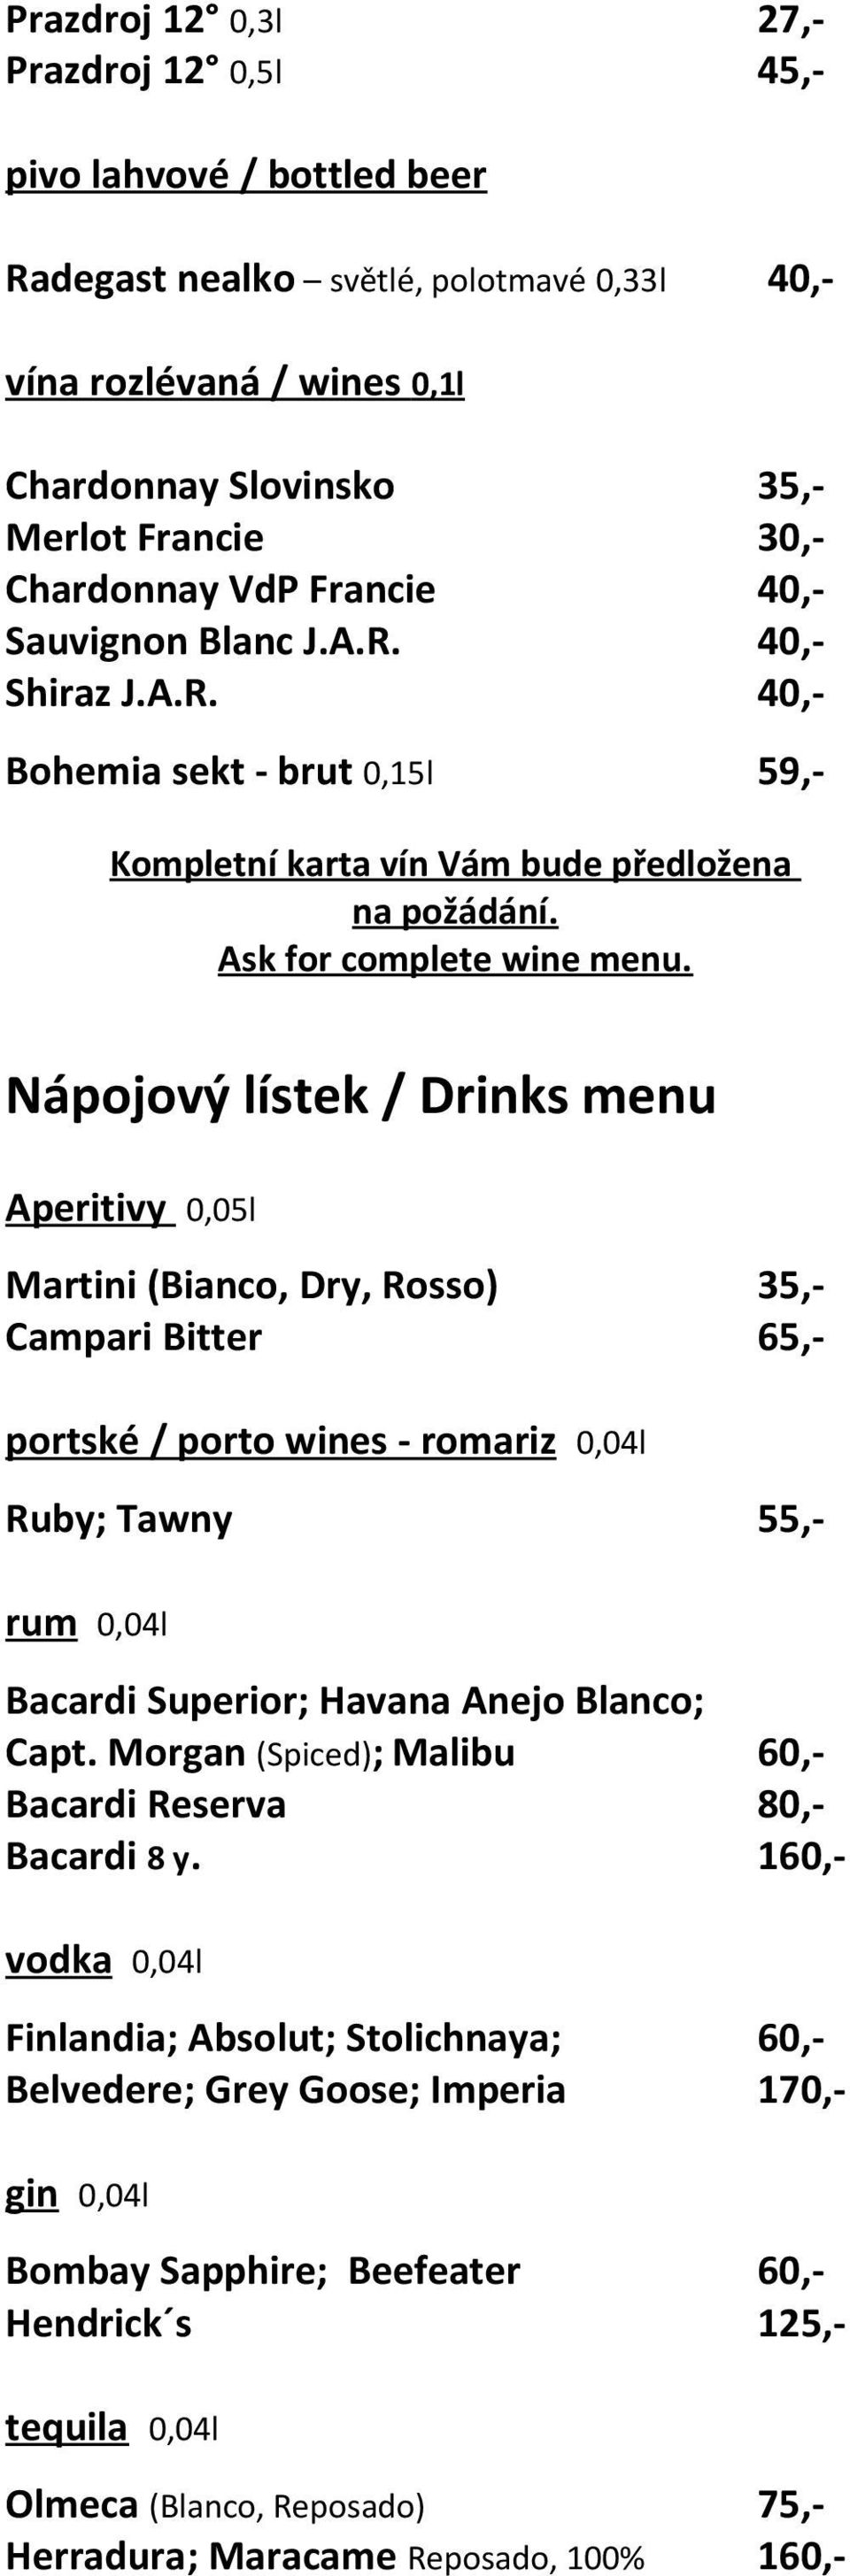 Nápojový lístek / Drinks menu Aperitivy 0,05l Martini (Bianco, Dry, Rosso) 35,- Campari Bitter 65,- portské / porto wines - romariz 0,04l Ruby; Tawny 55,- rum 0,04l Bacardi Superior; Havana Anejo